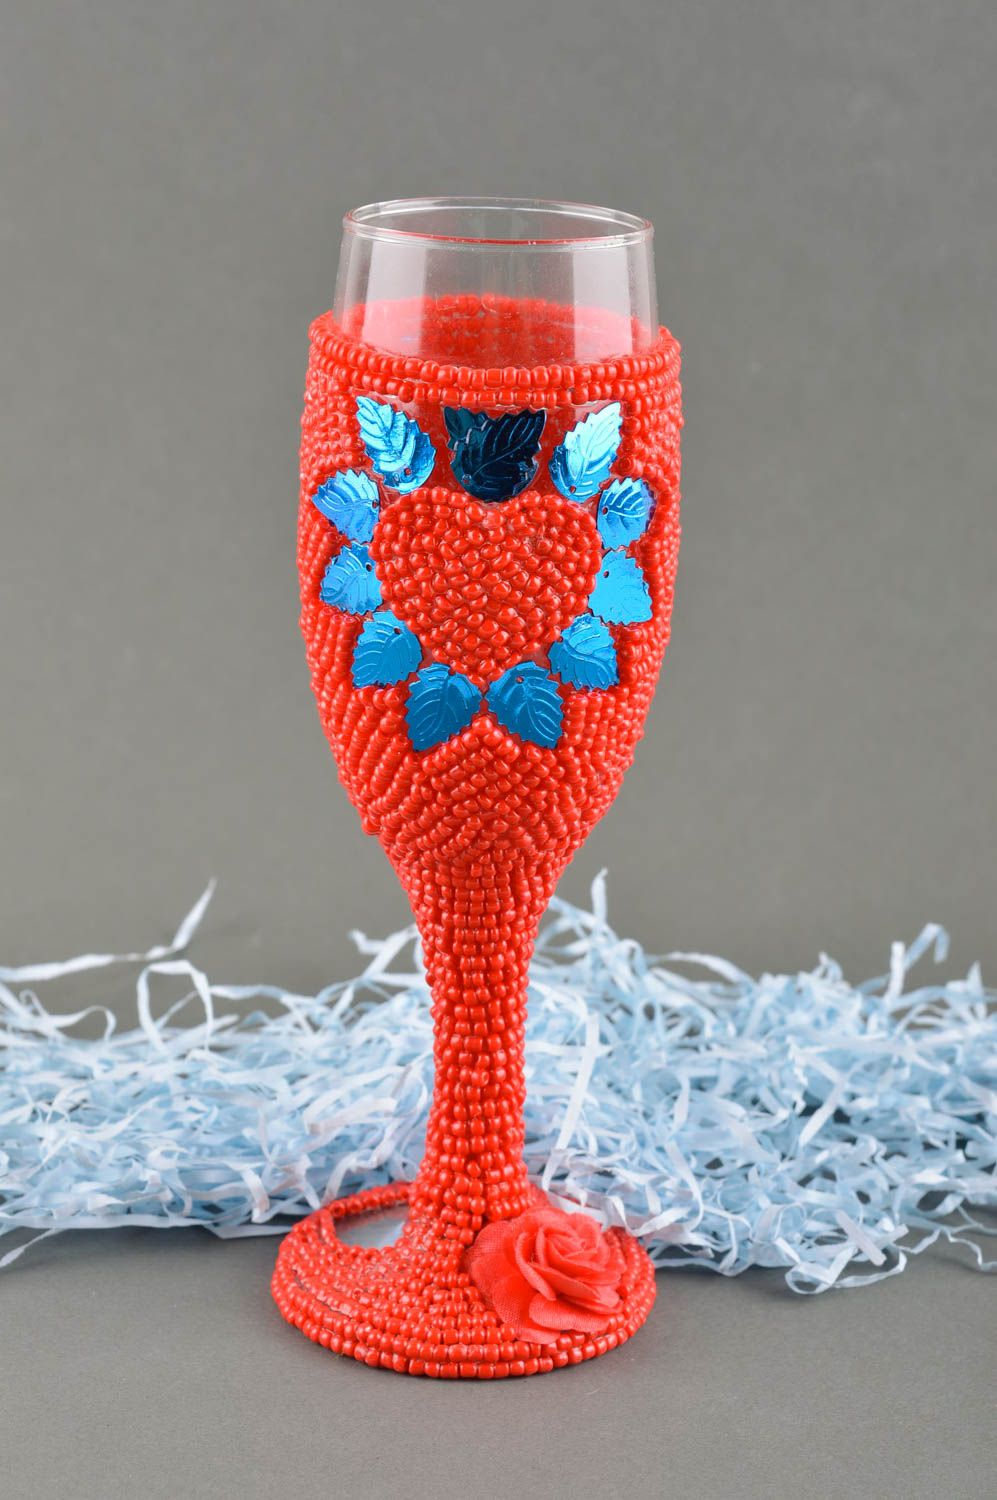 Unusual handmade glass champagne glass design glass decorative glass home decor photo 1